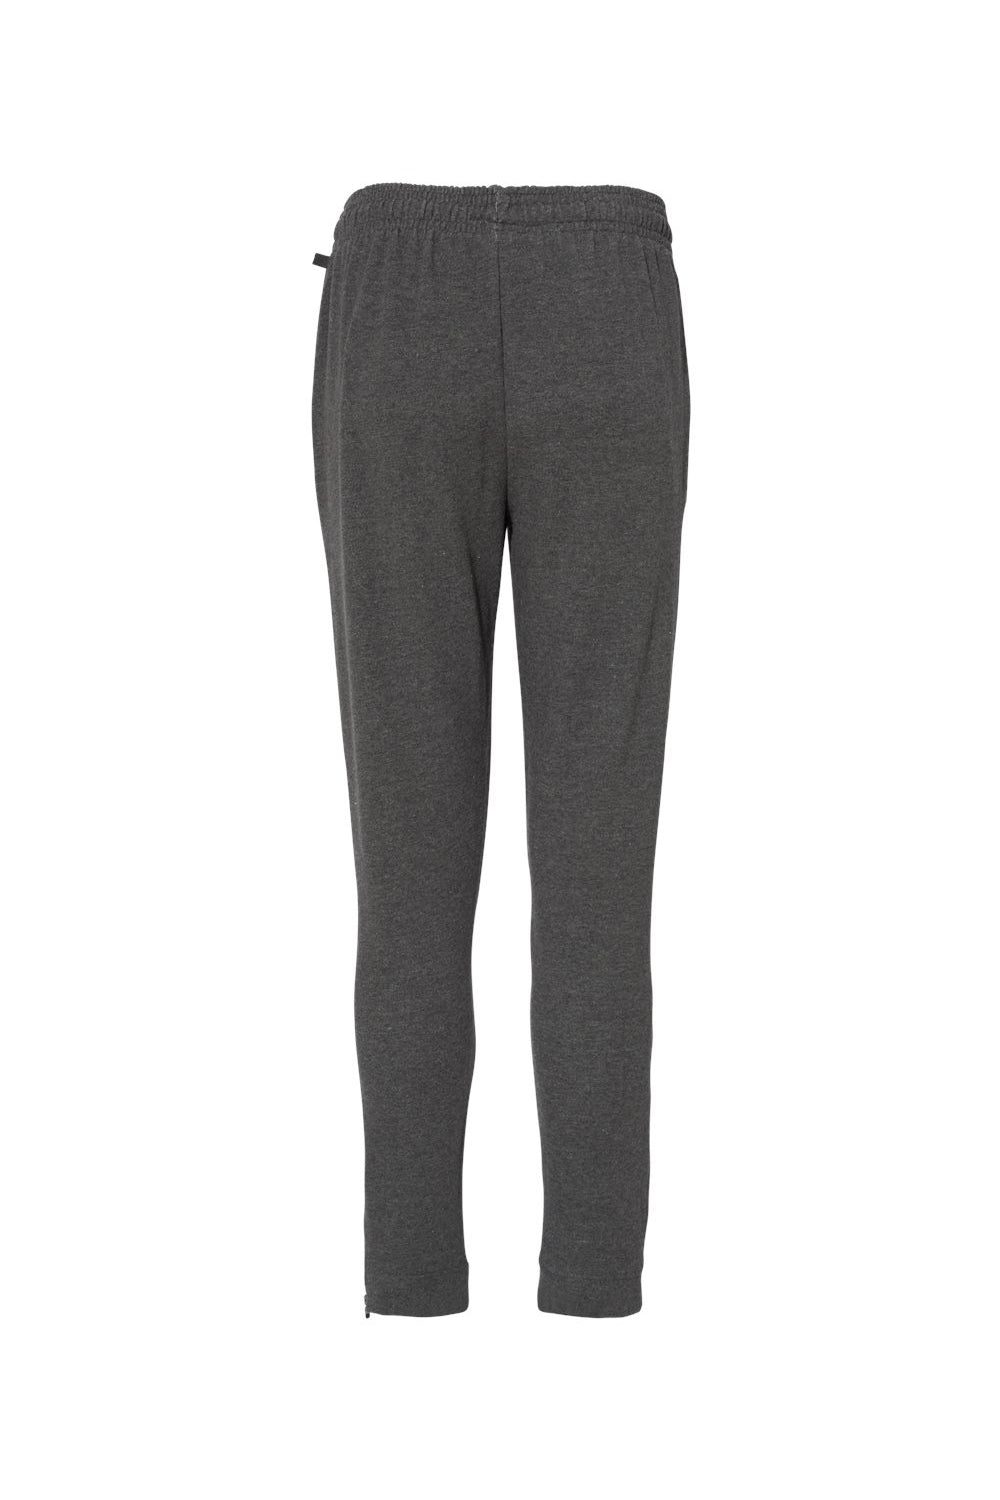 Badger 1070 Mens FitFlex Moisture Wicking Sweatpants w/ Pockets Charcoal Grey Flat Back